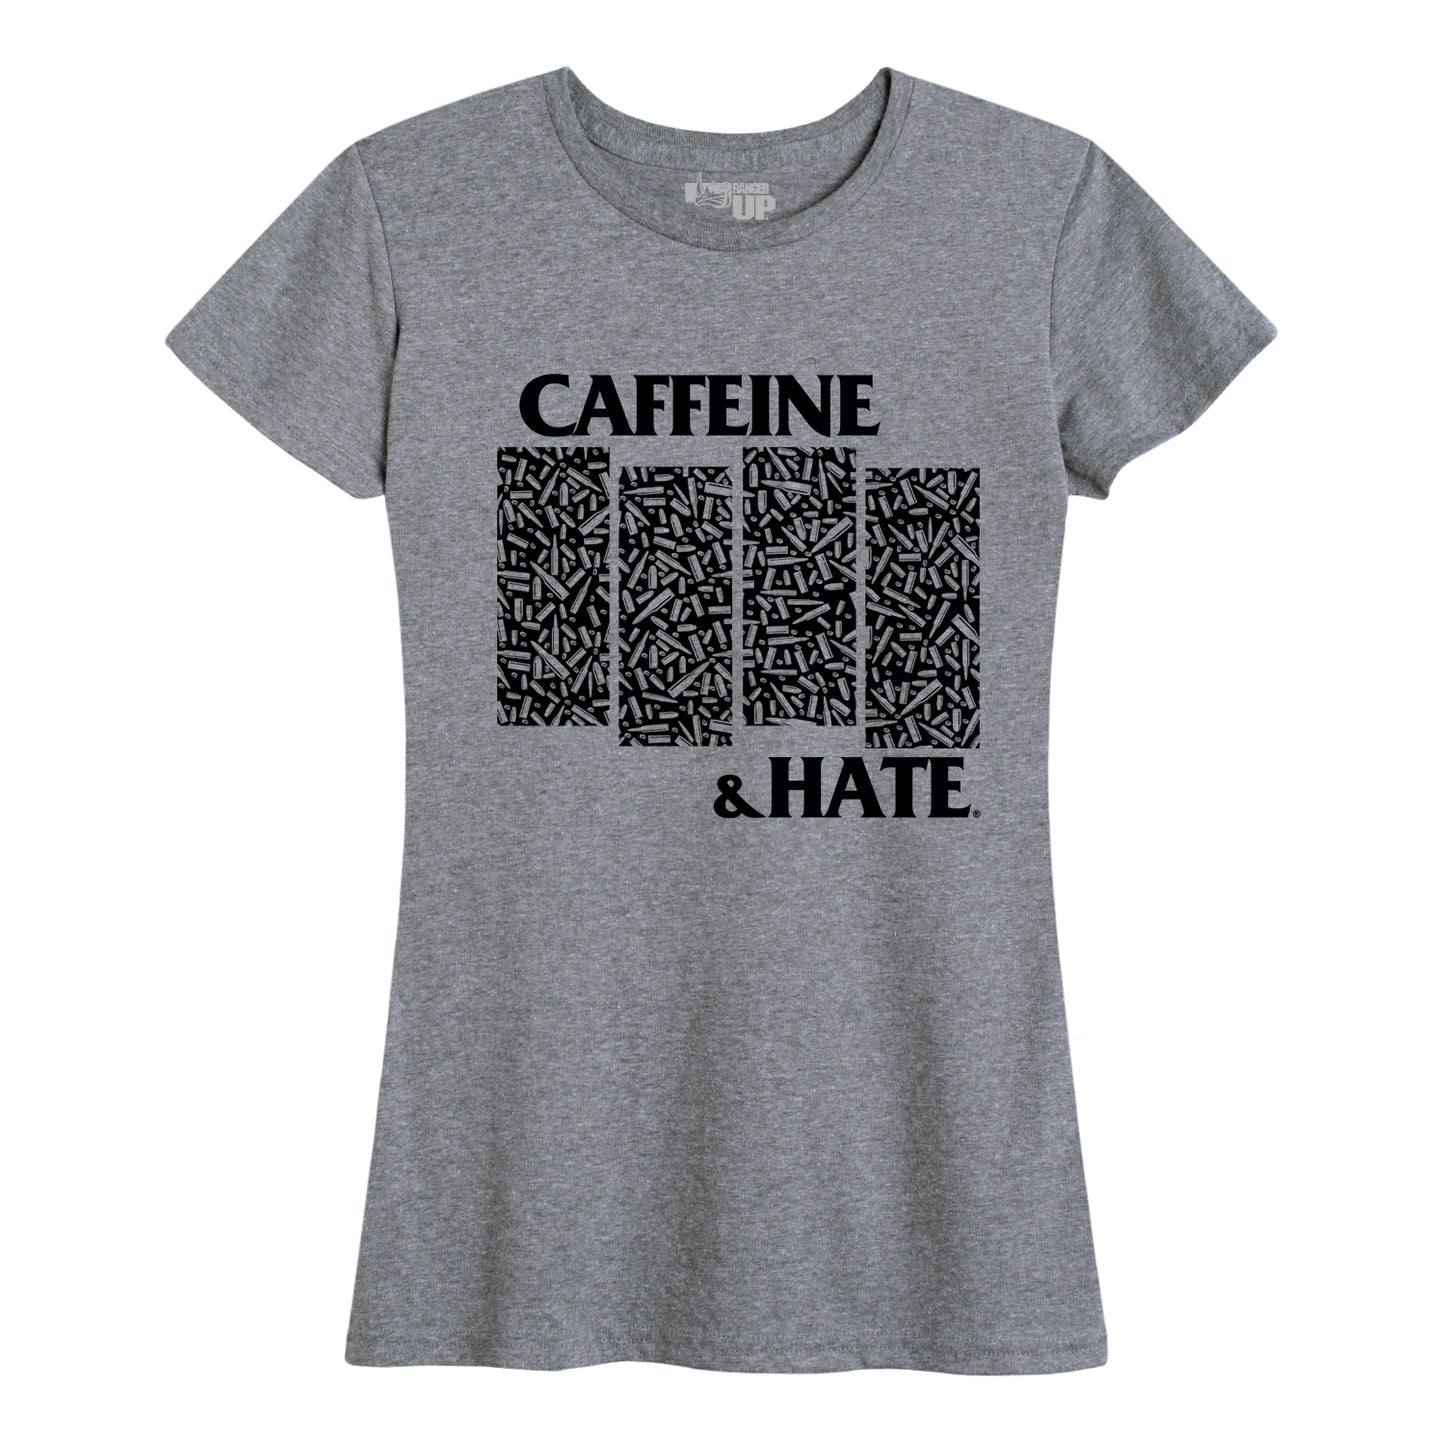 Women's Caffeine Black Flag Tee